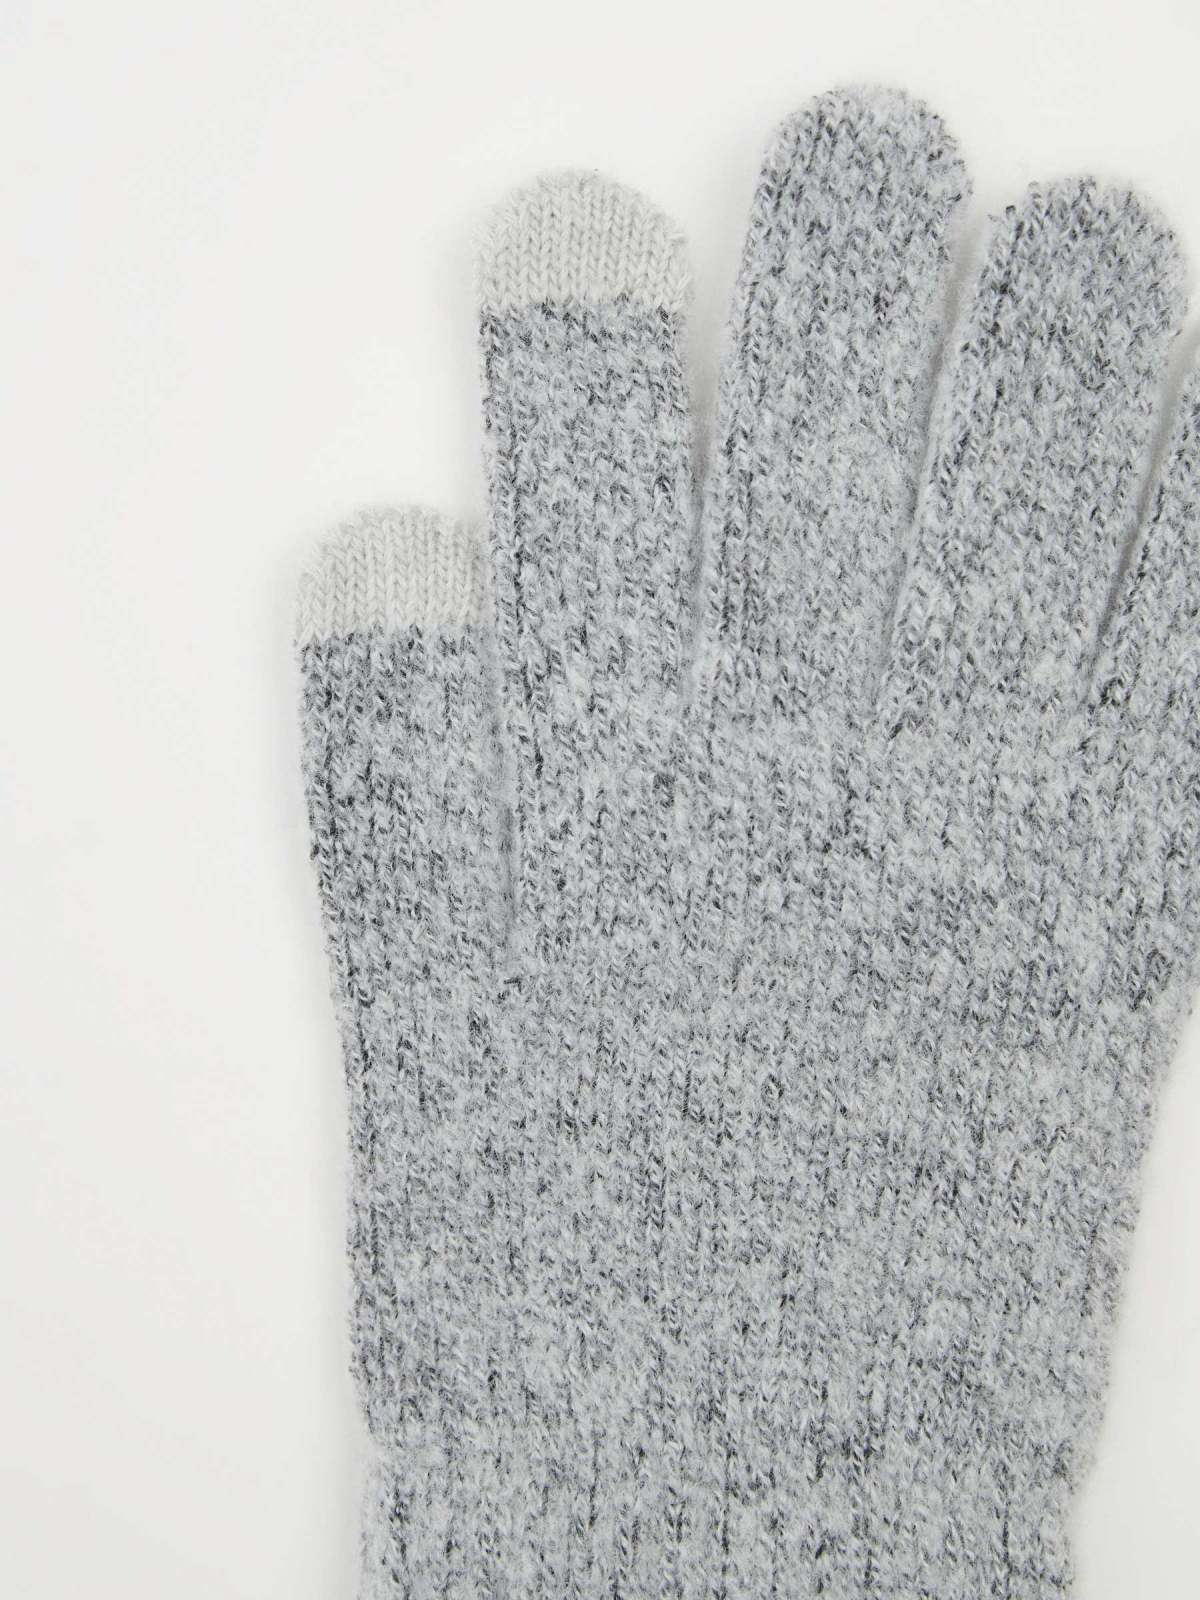 Marbled tactile glove grey medium short view